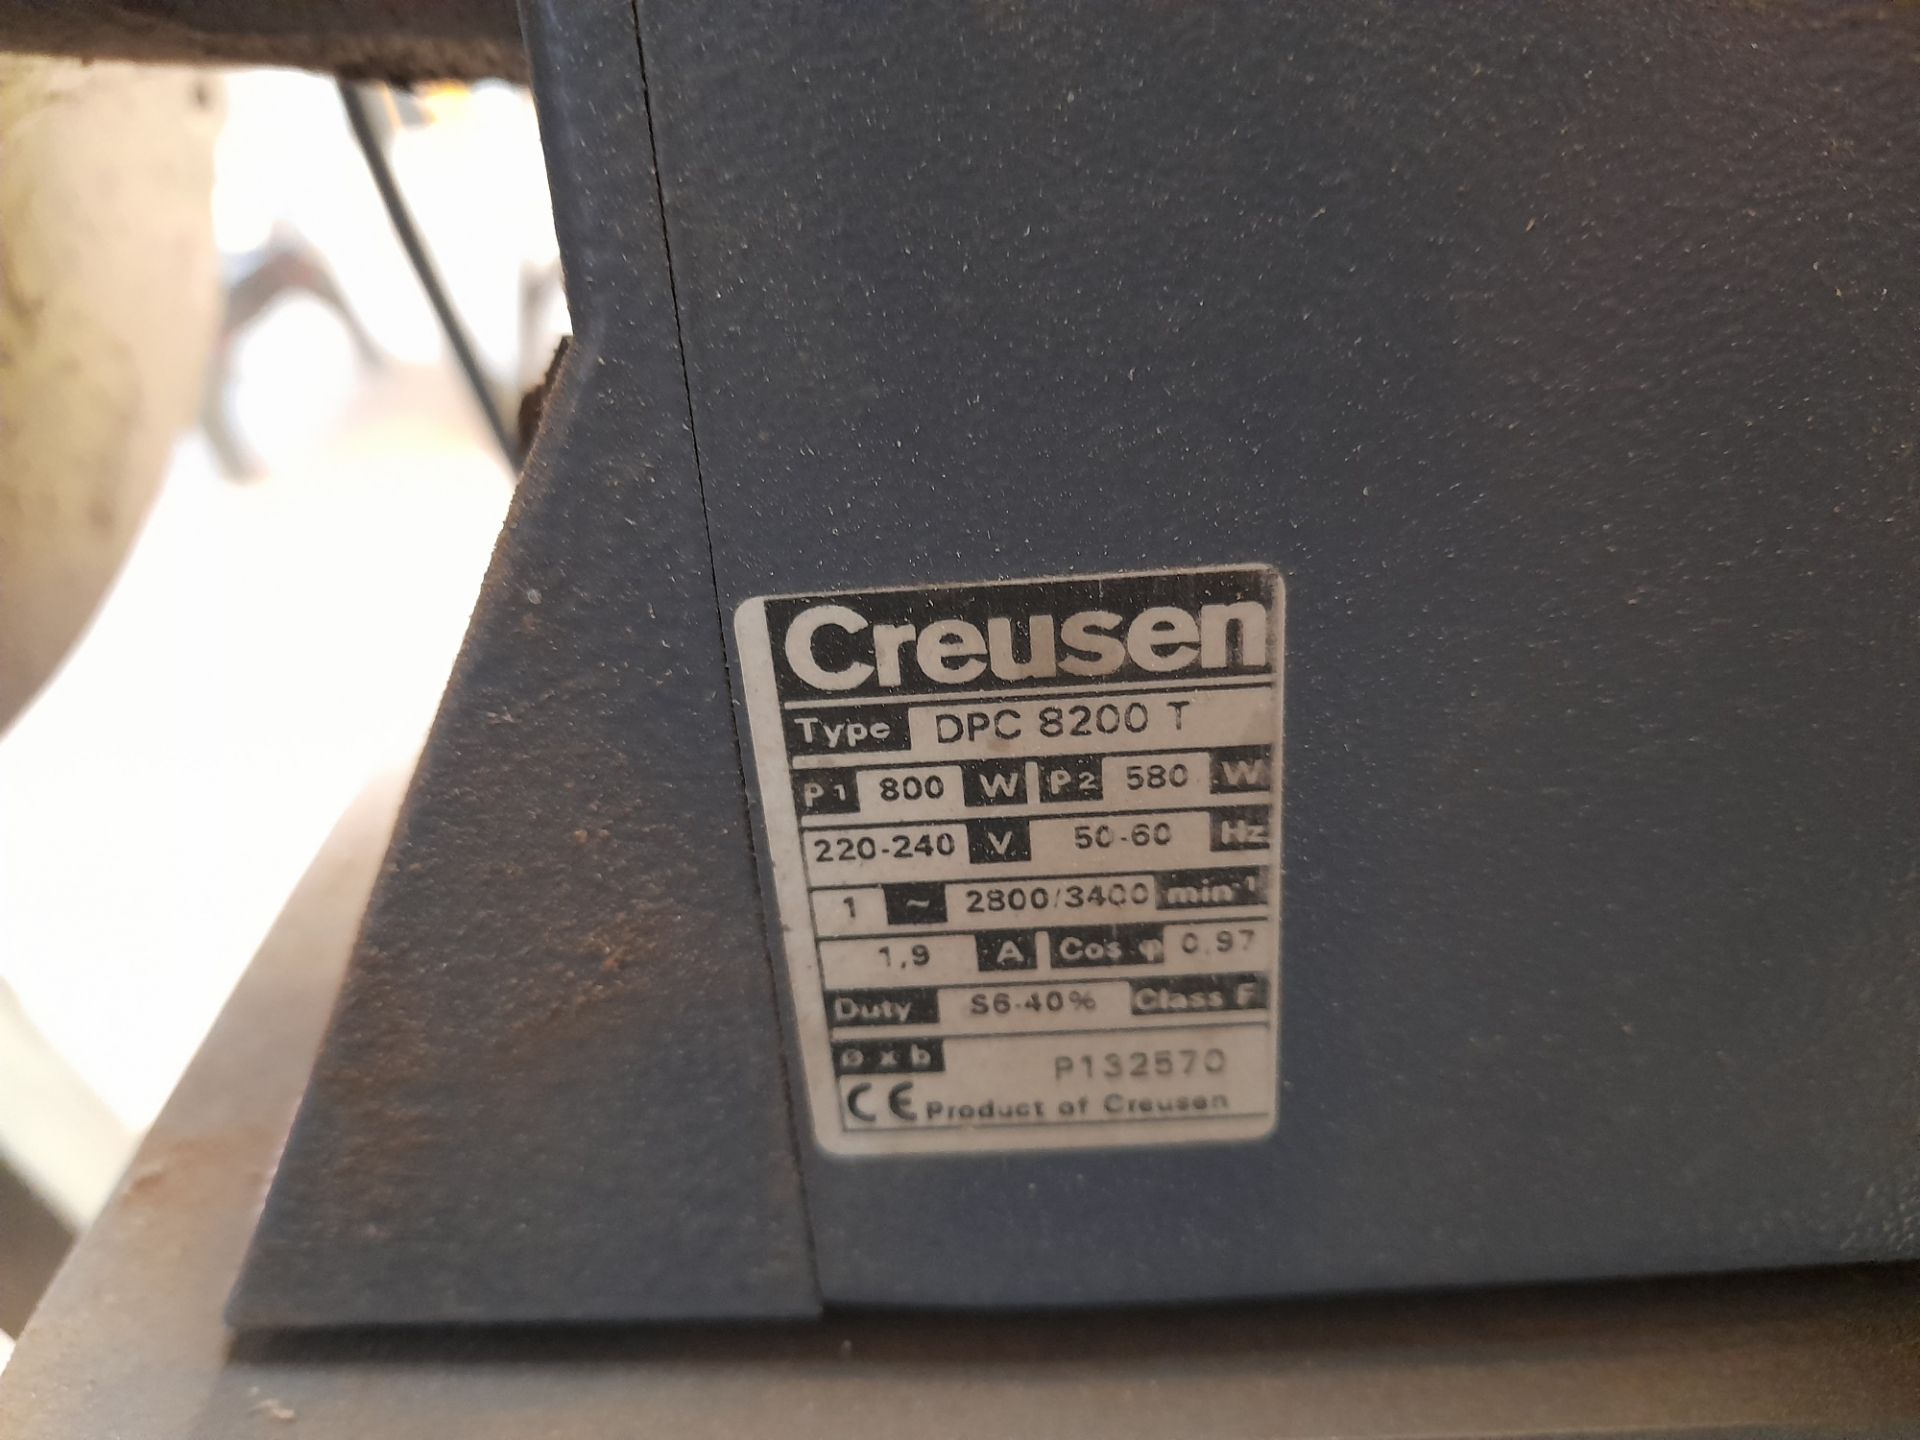 Creusen DPC8200 twin wheel polisher (Serial Number E132570) - Image 2 of 2